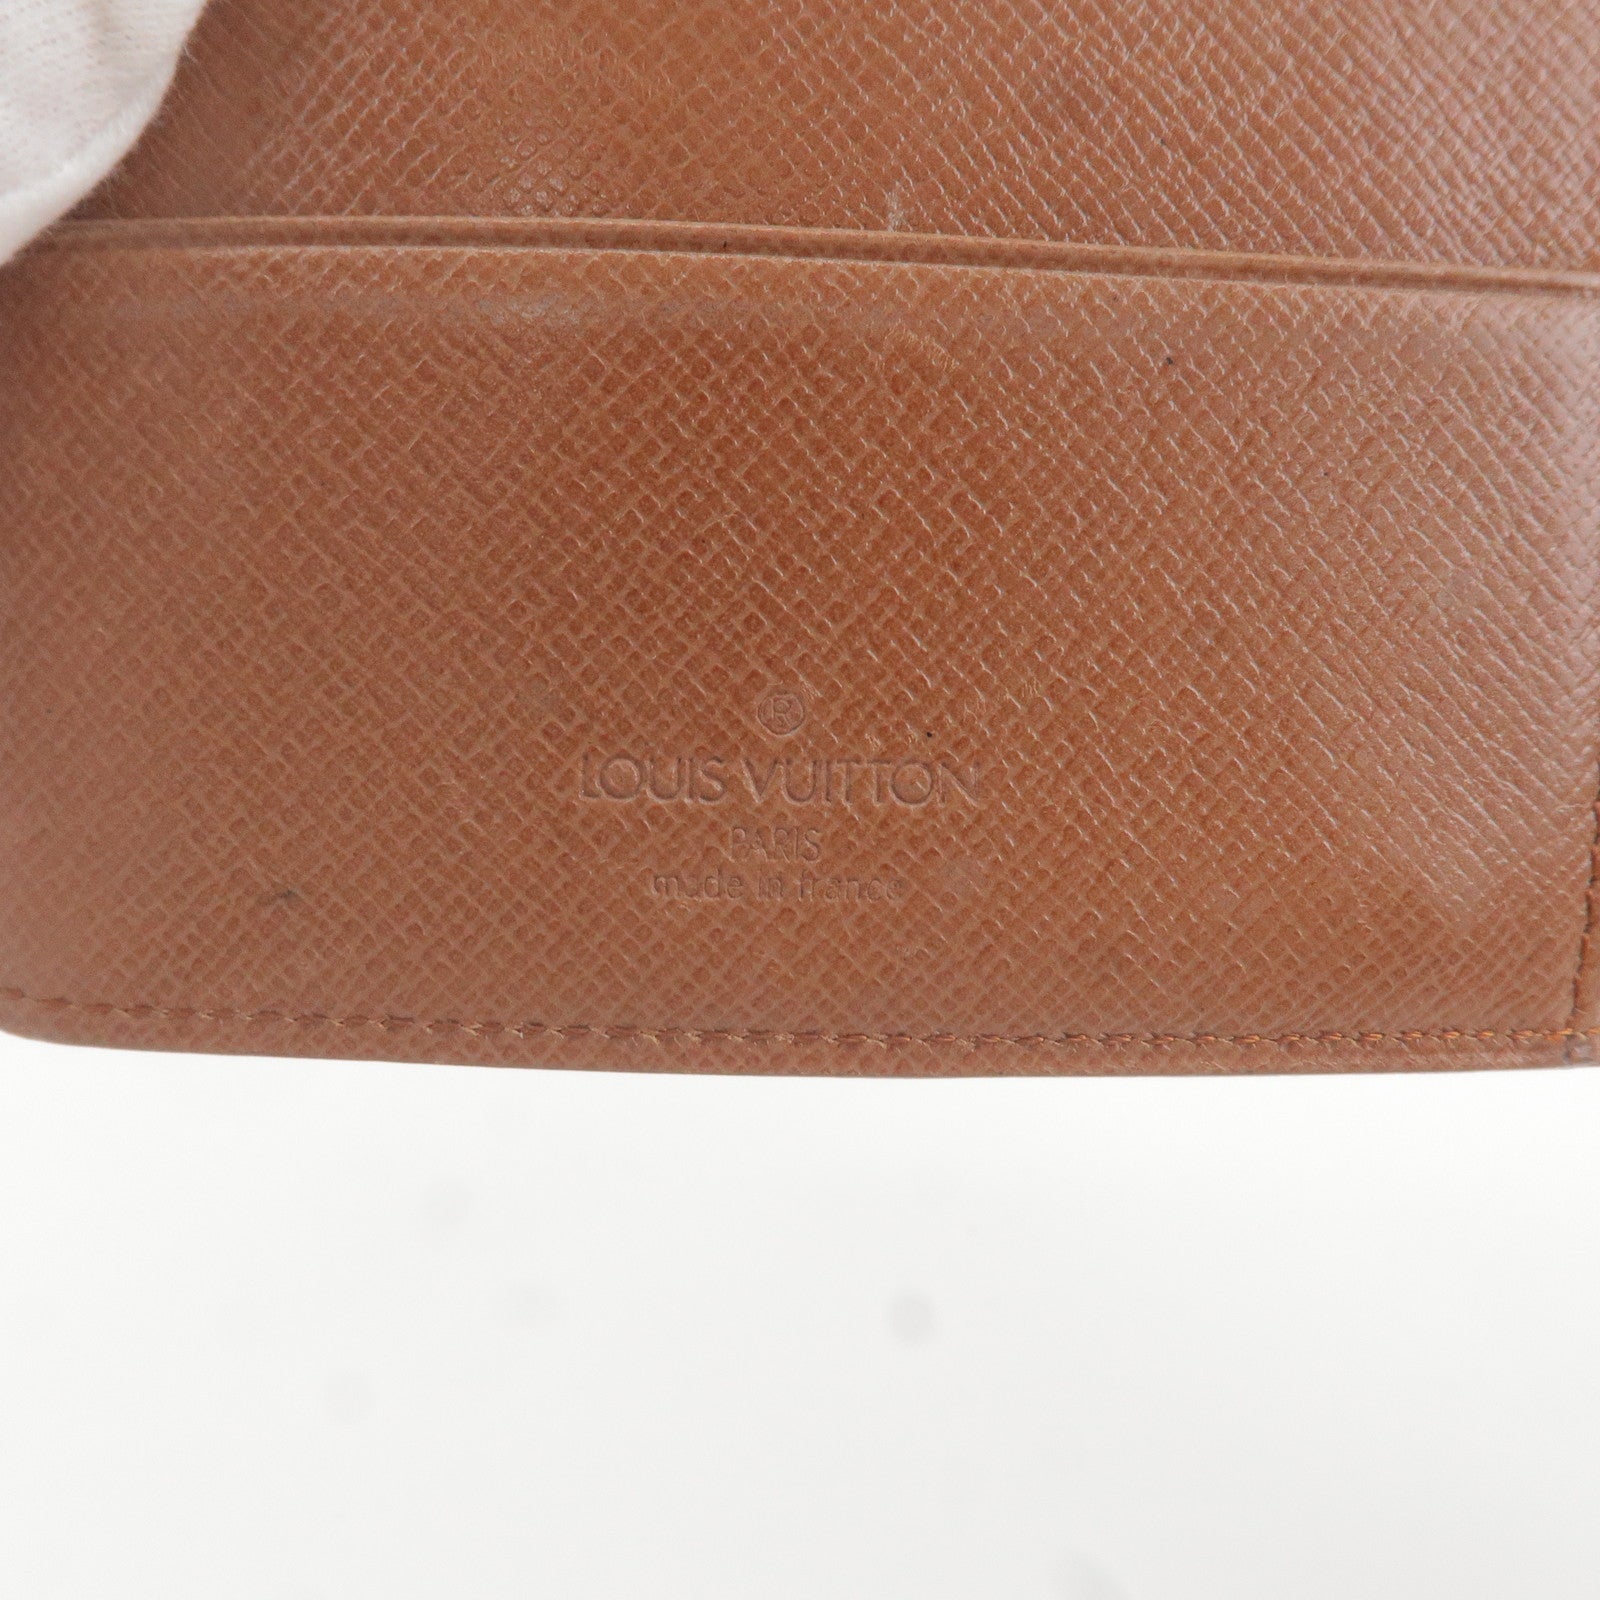 Louis Vuitton 2016 pre-owned Retiro PM bag